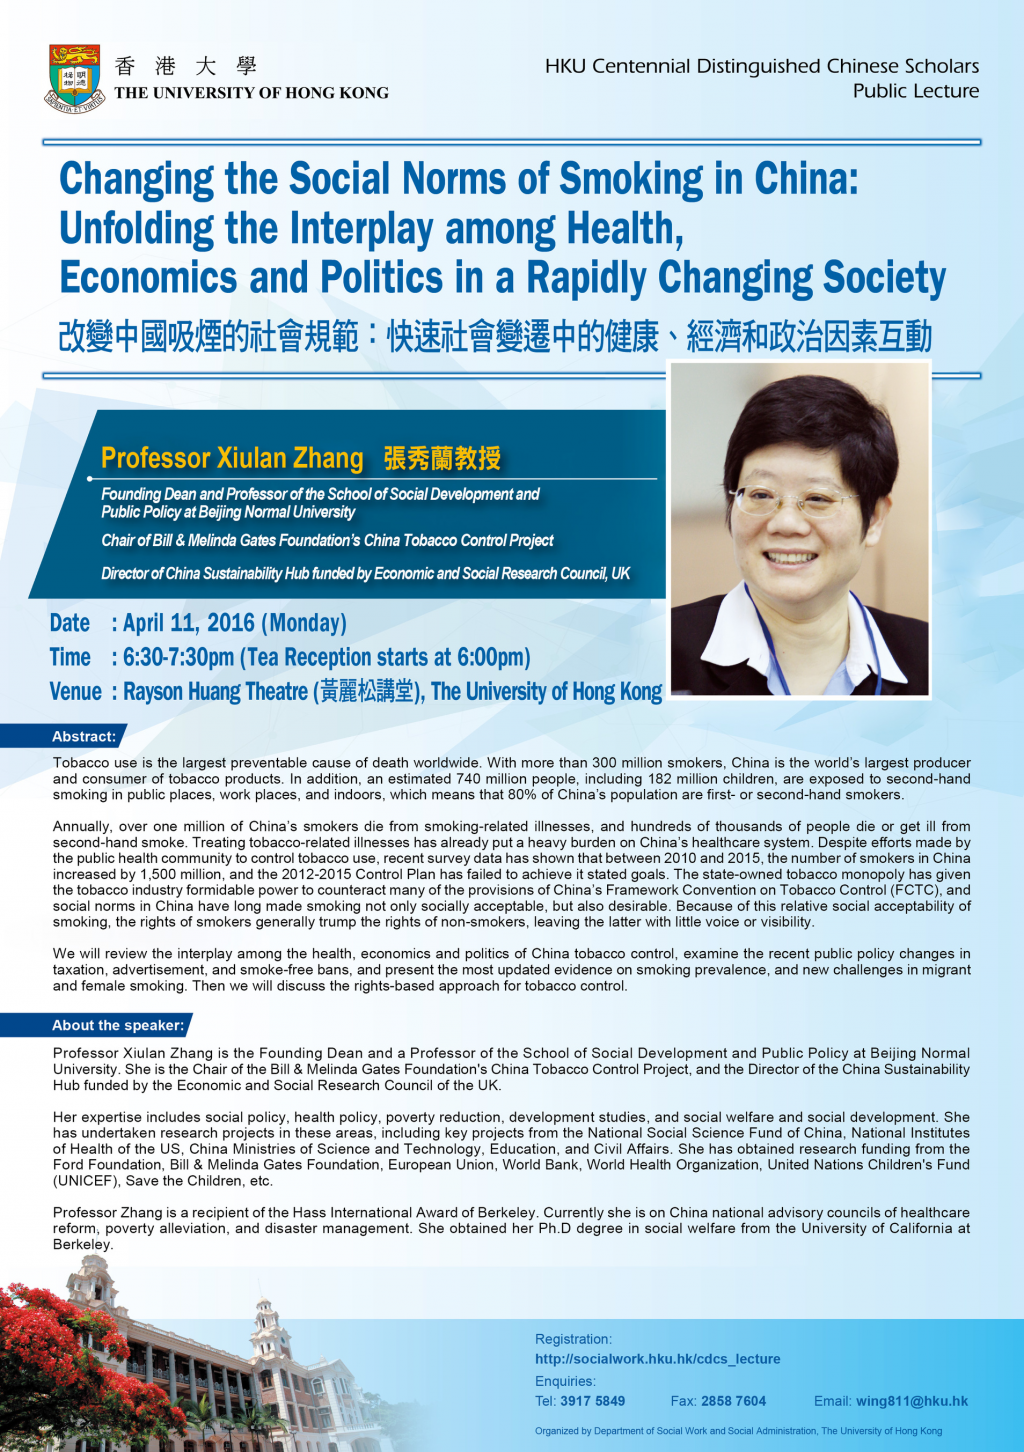 Public Lecture by Professor Xiulan Zhang 